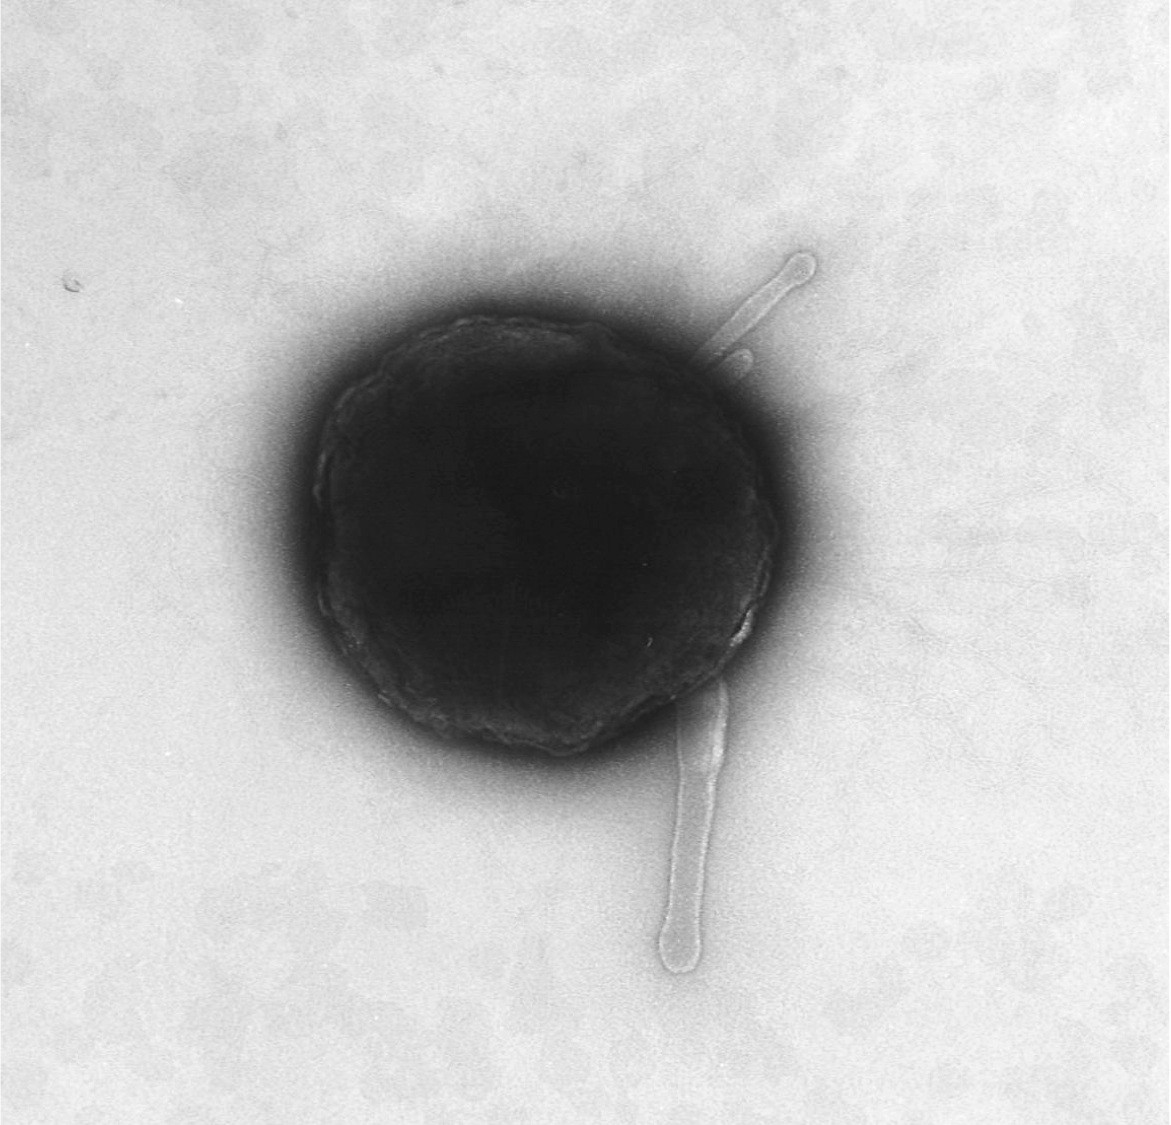 A novel bacterium (Flavicella marina, gen. nov., sp. nov.) obtained in this Lab.